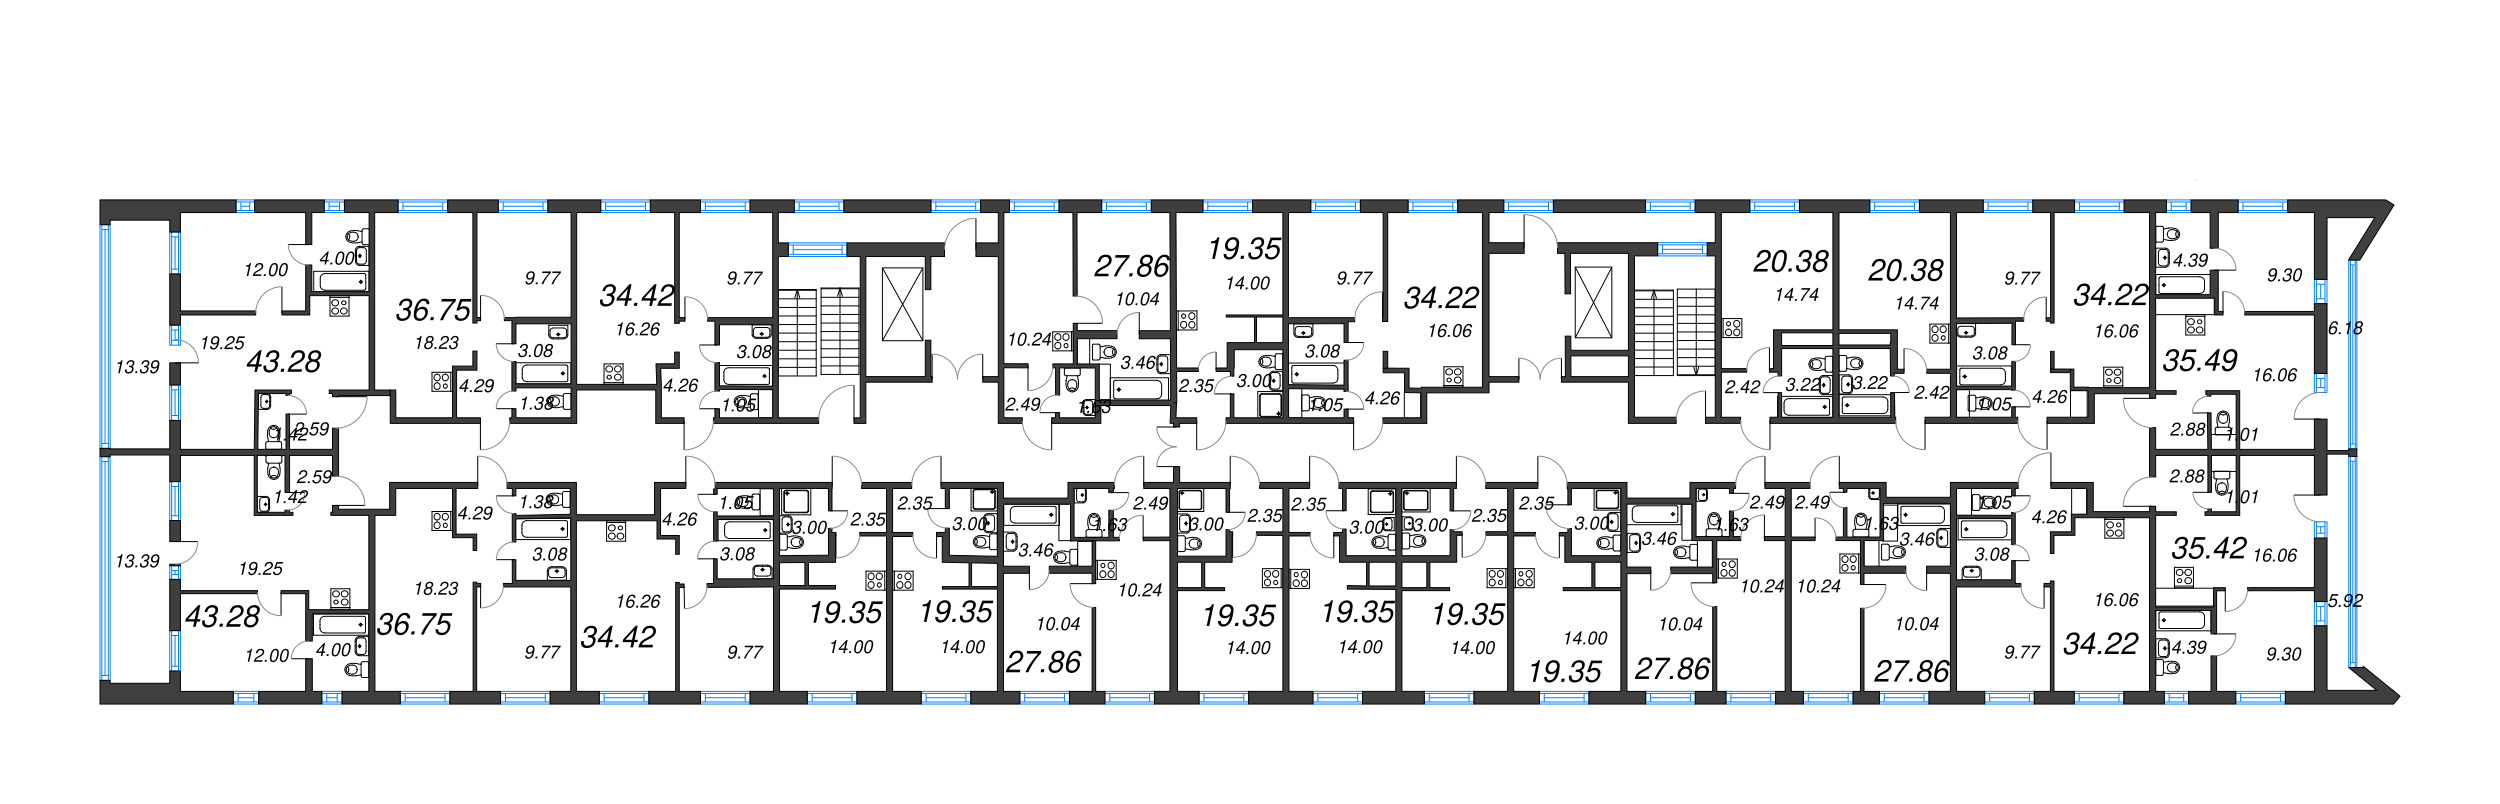 2-комнатная (Евро) квартира, 34.22 м² - планировка этажа